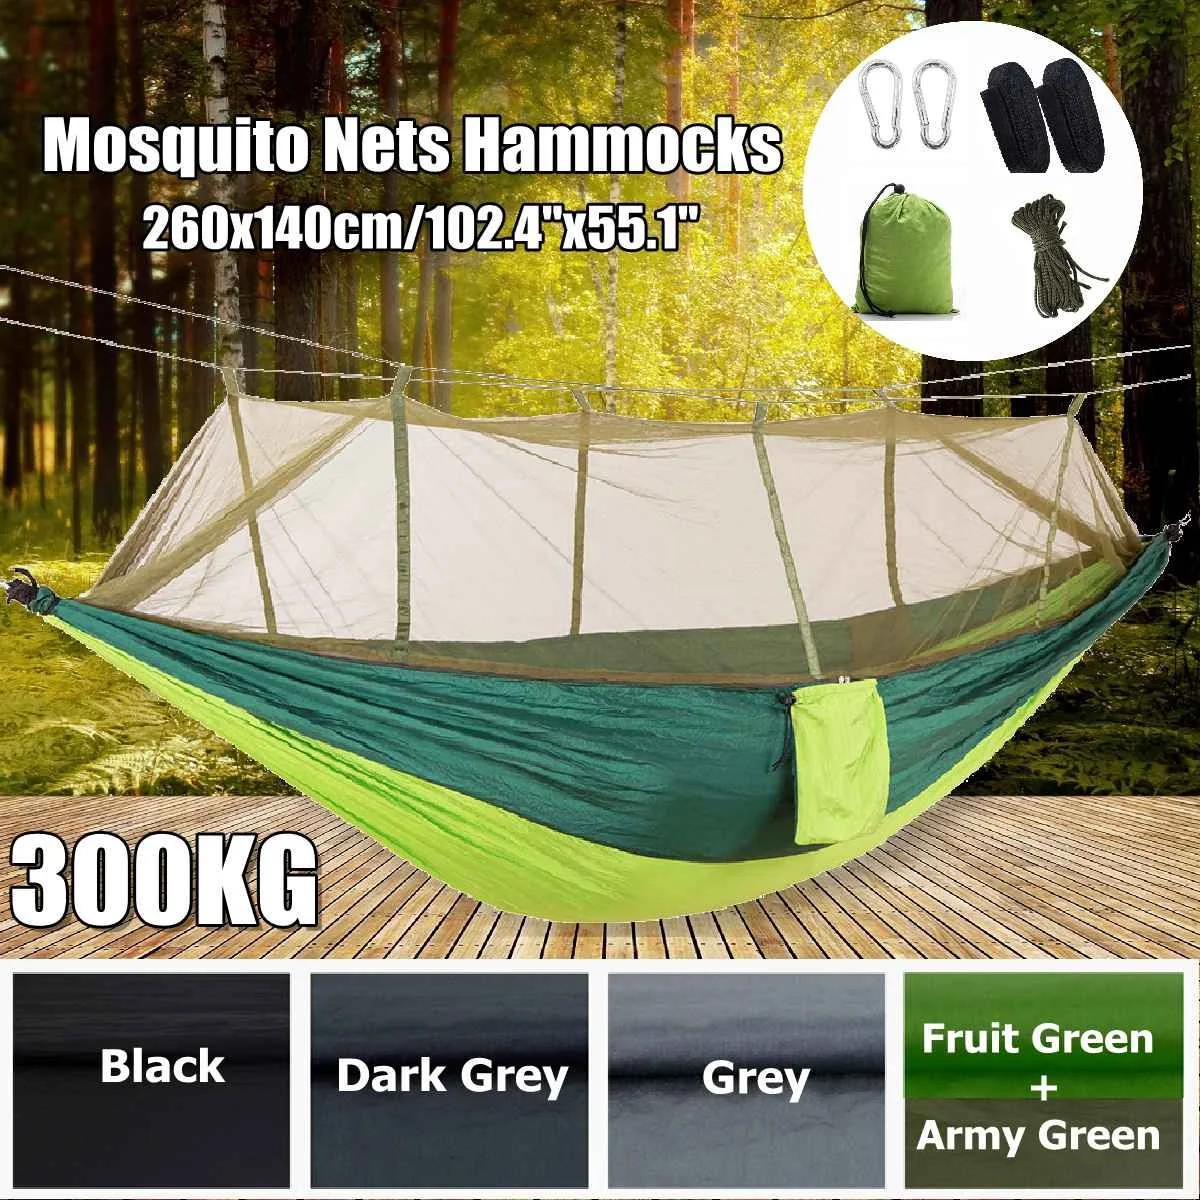 

1-2 Person Hammock with Mosquito Net Portable Outdoor Parachute Hammocks Swing Sleeping Hammock Hiking Camping Stuff